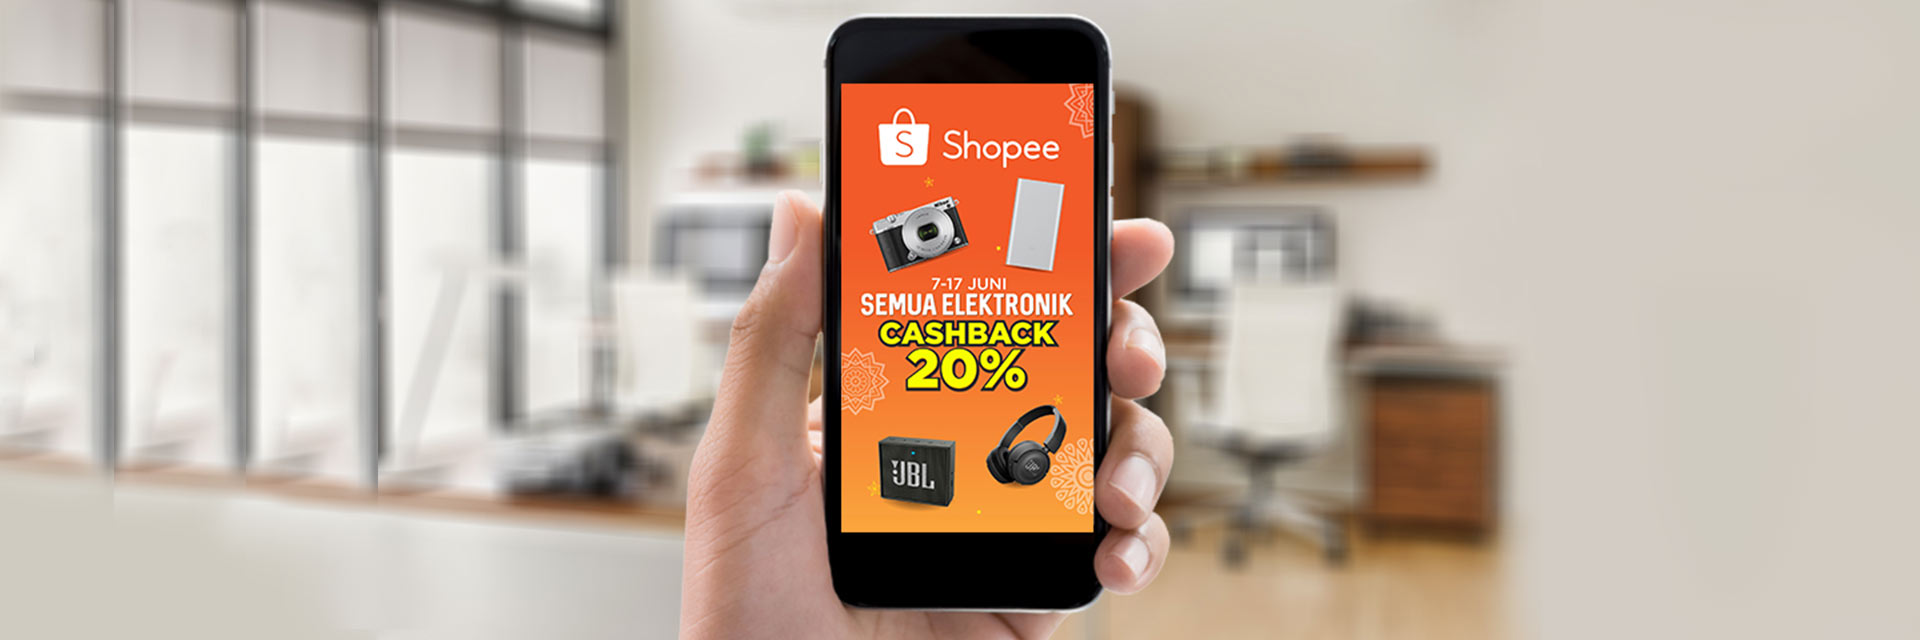 Shopee menawarkan produk-produk elektronik dengan promo cashback.